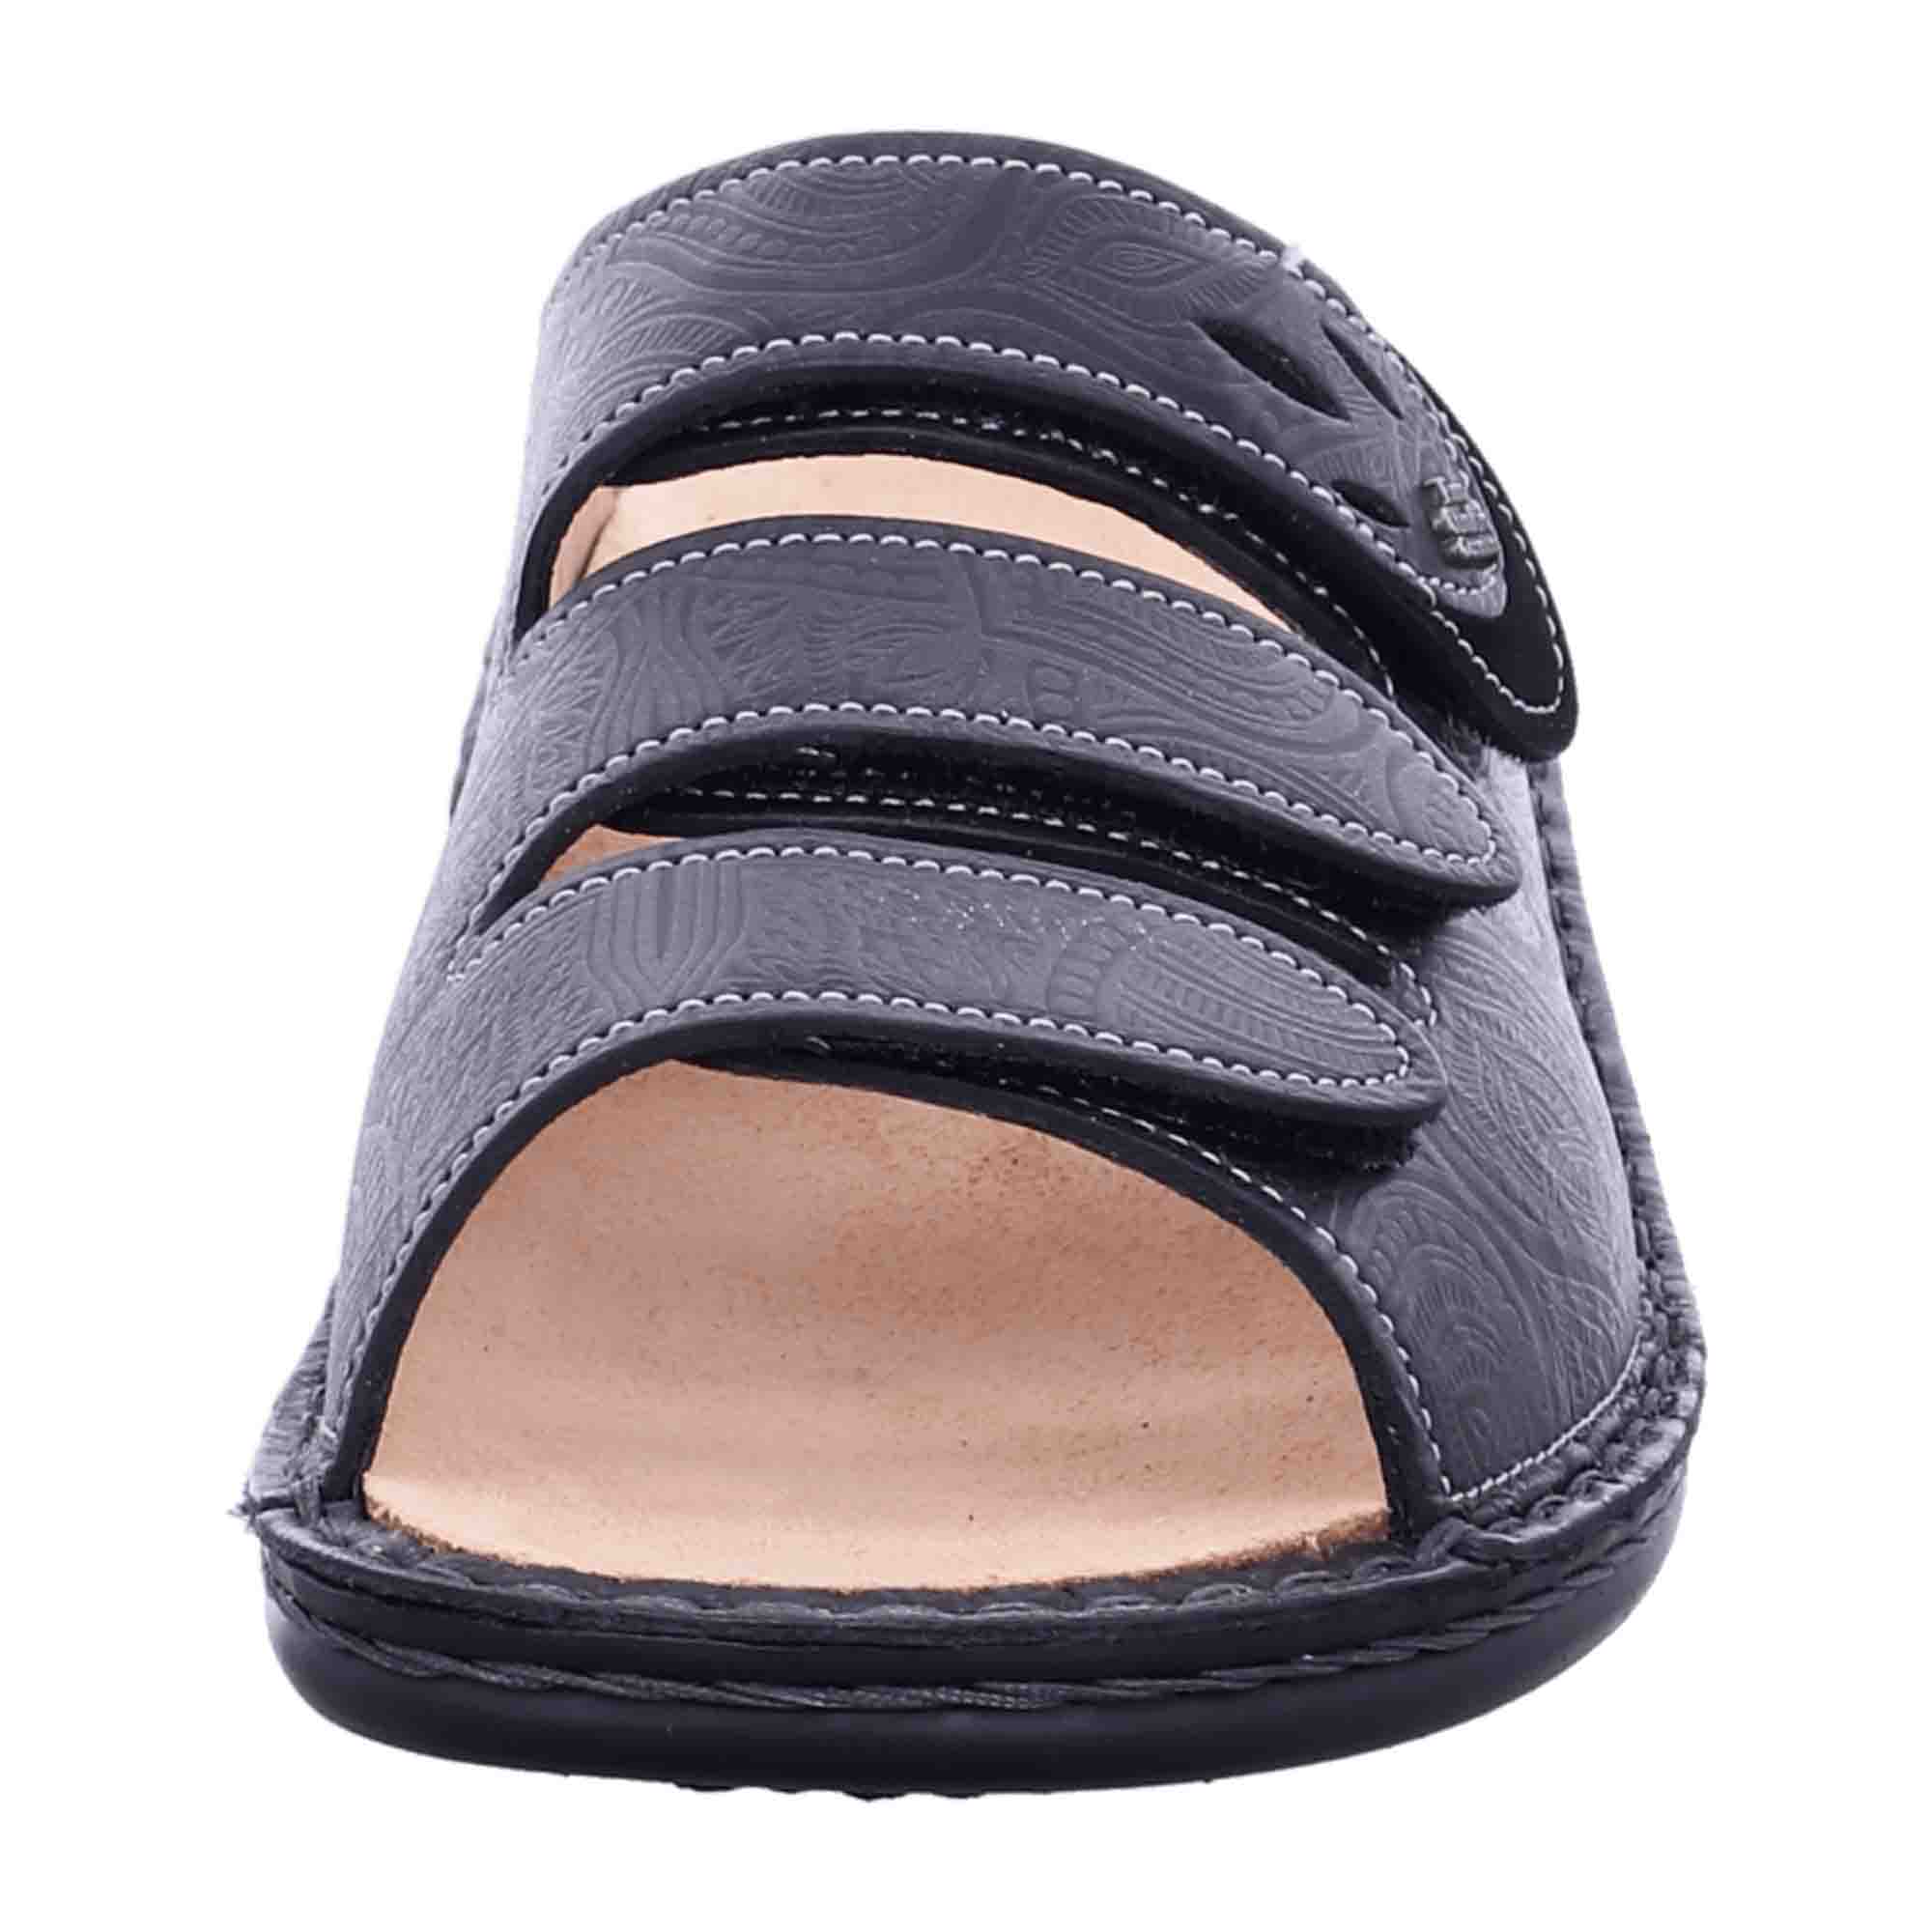 Finn Comfort Kos Women's Slide Sandals - Comfortable Black Leather Slides with Adjustable Straps and Soft Footbed